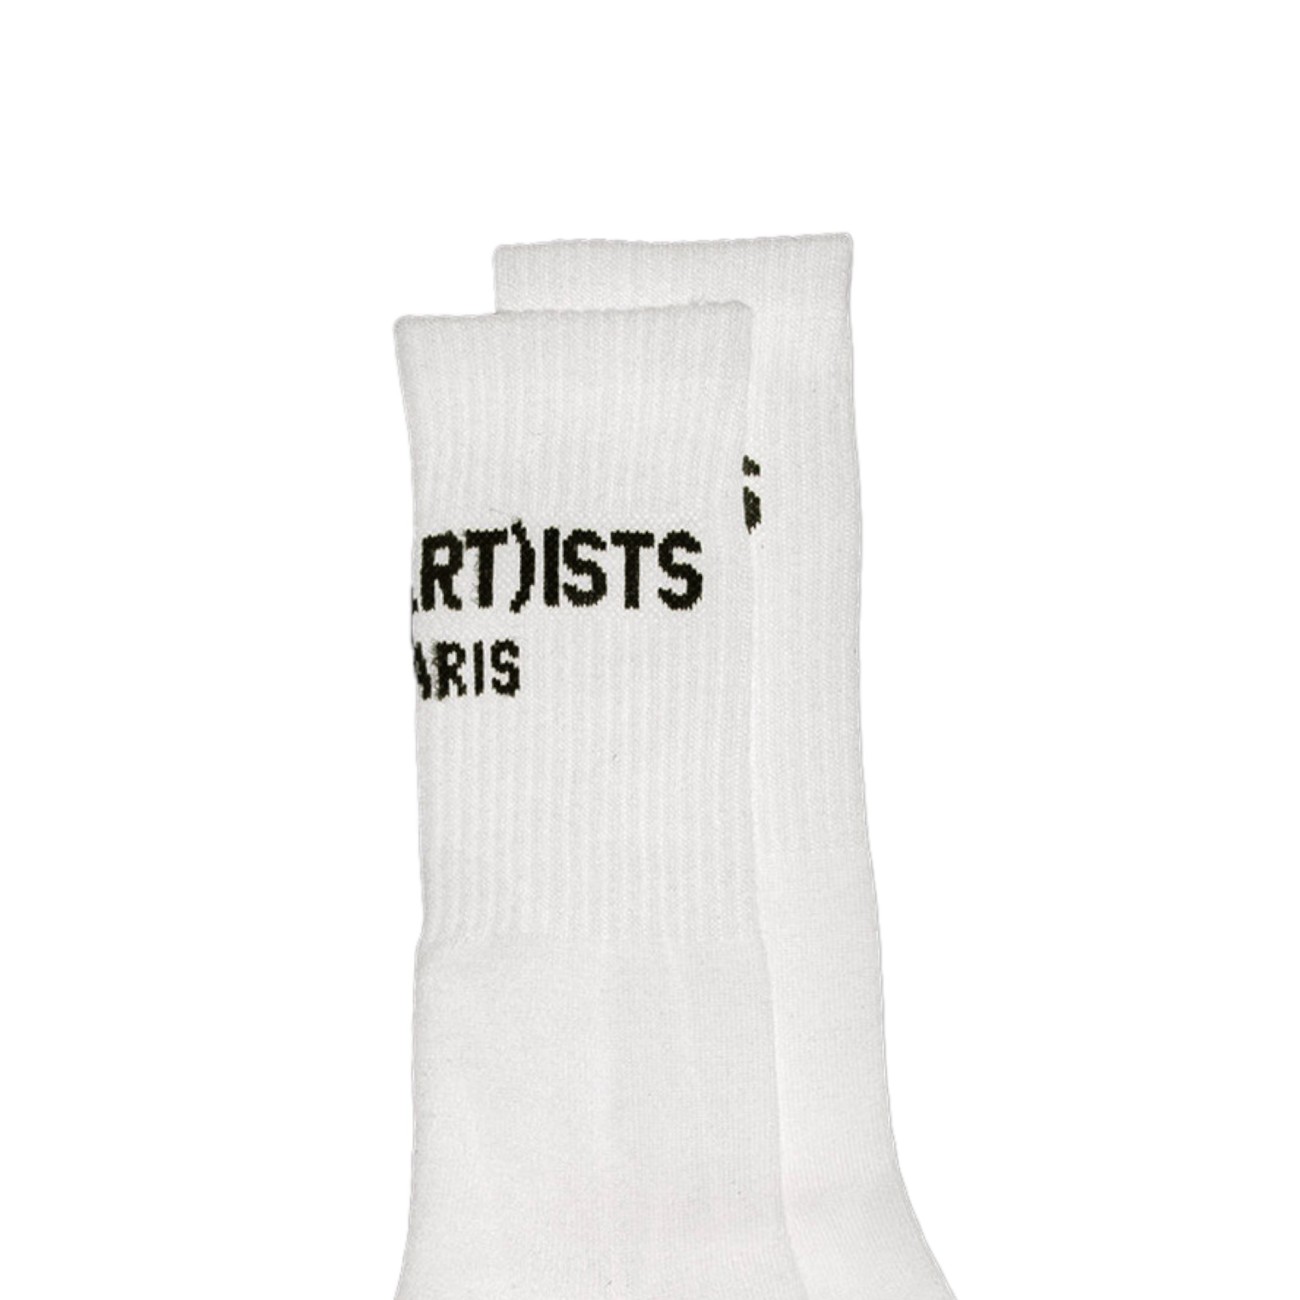 LES(ART)ISTS white terry socks